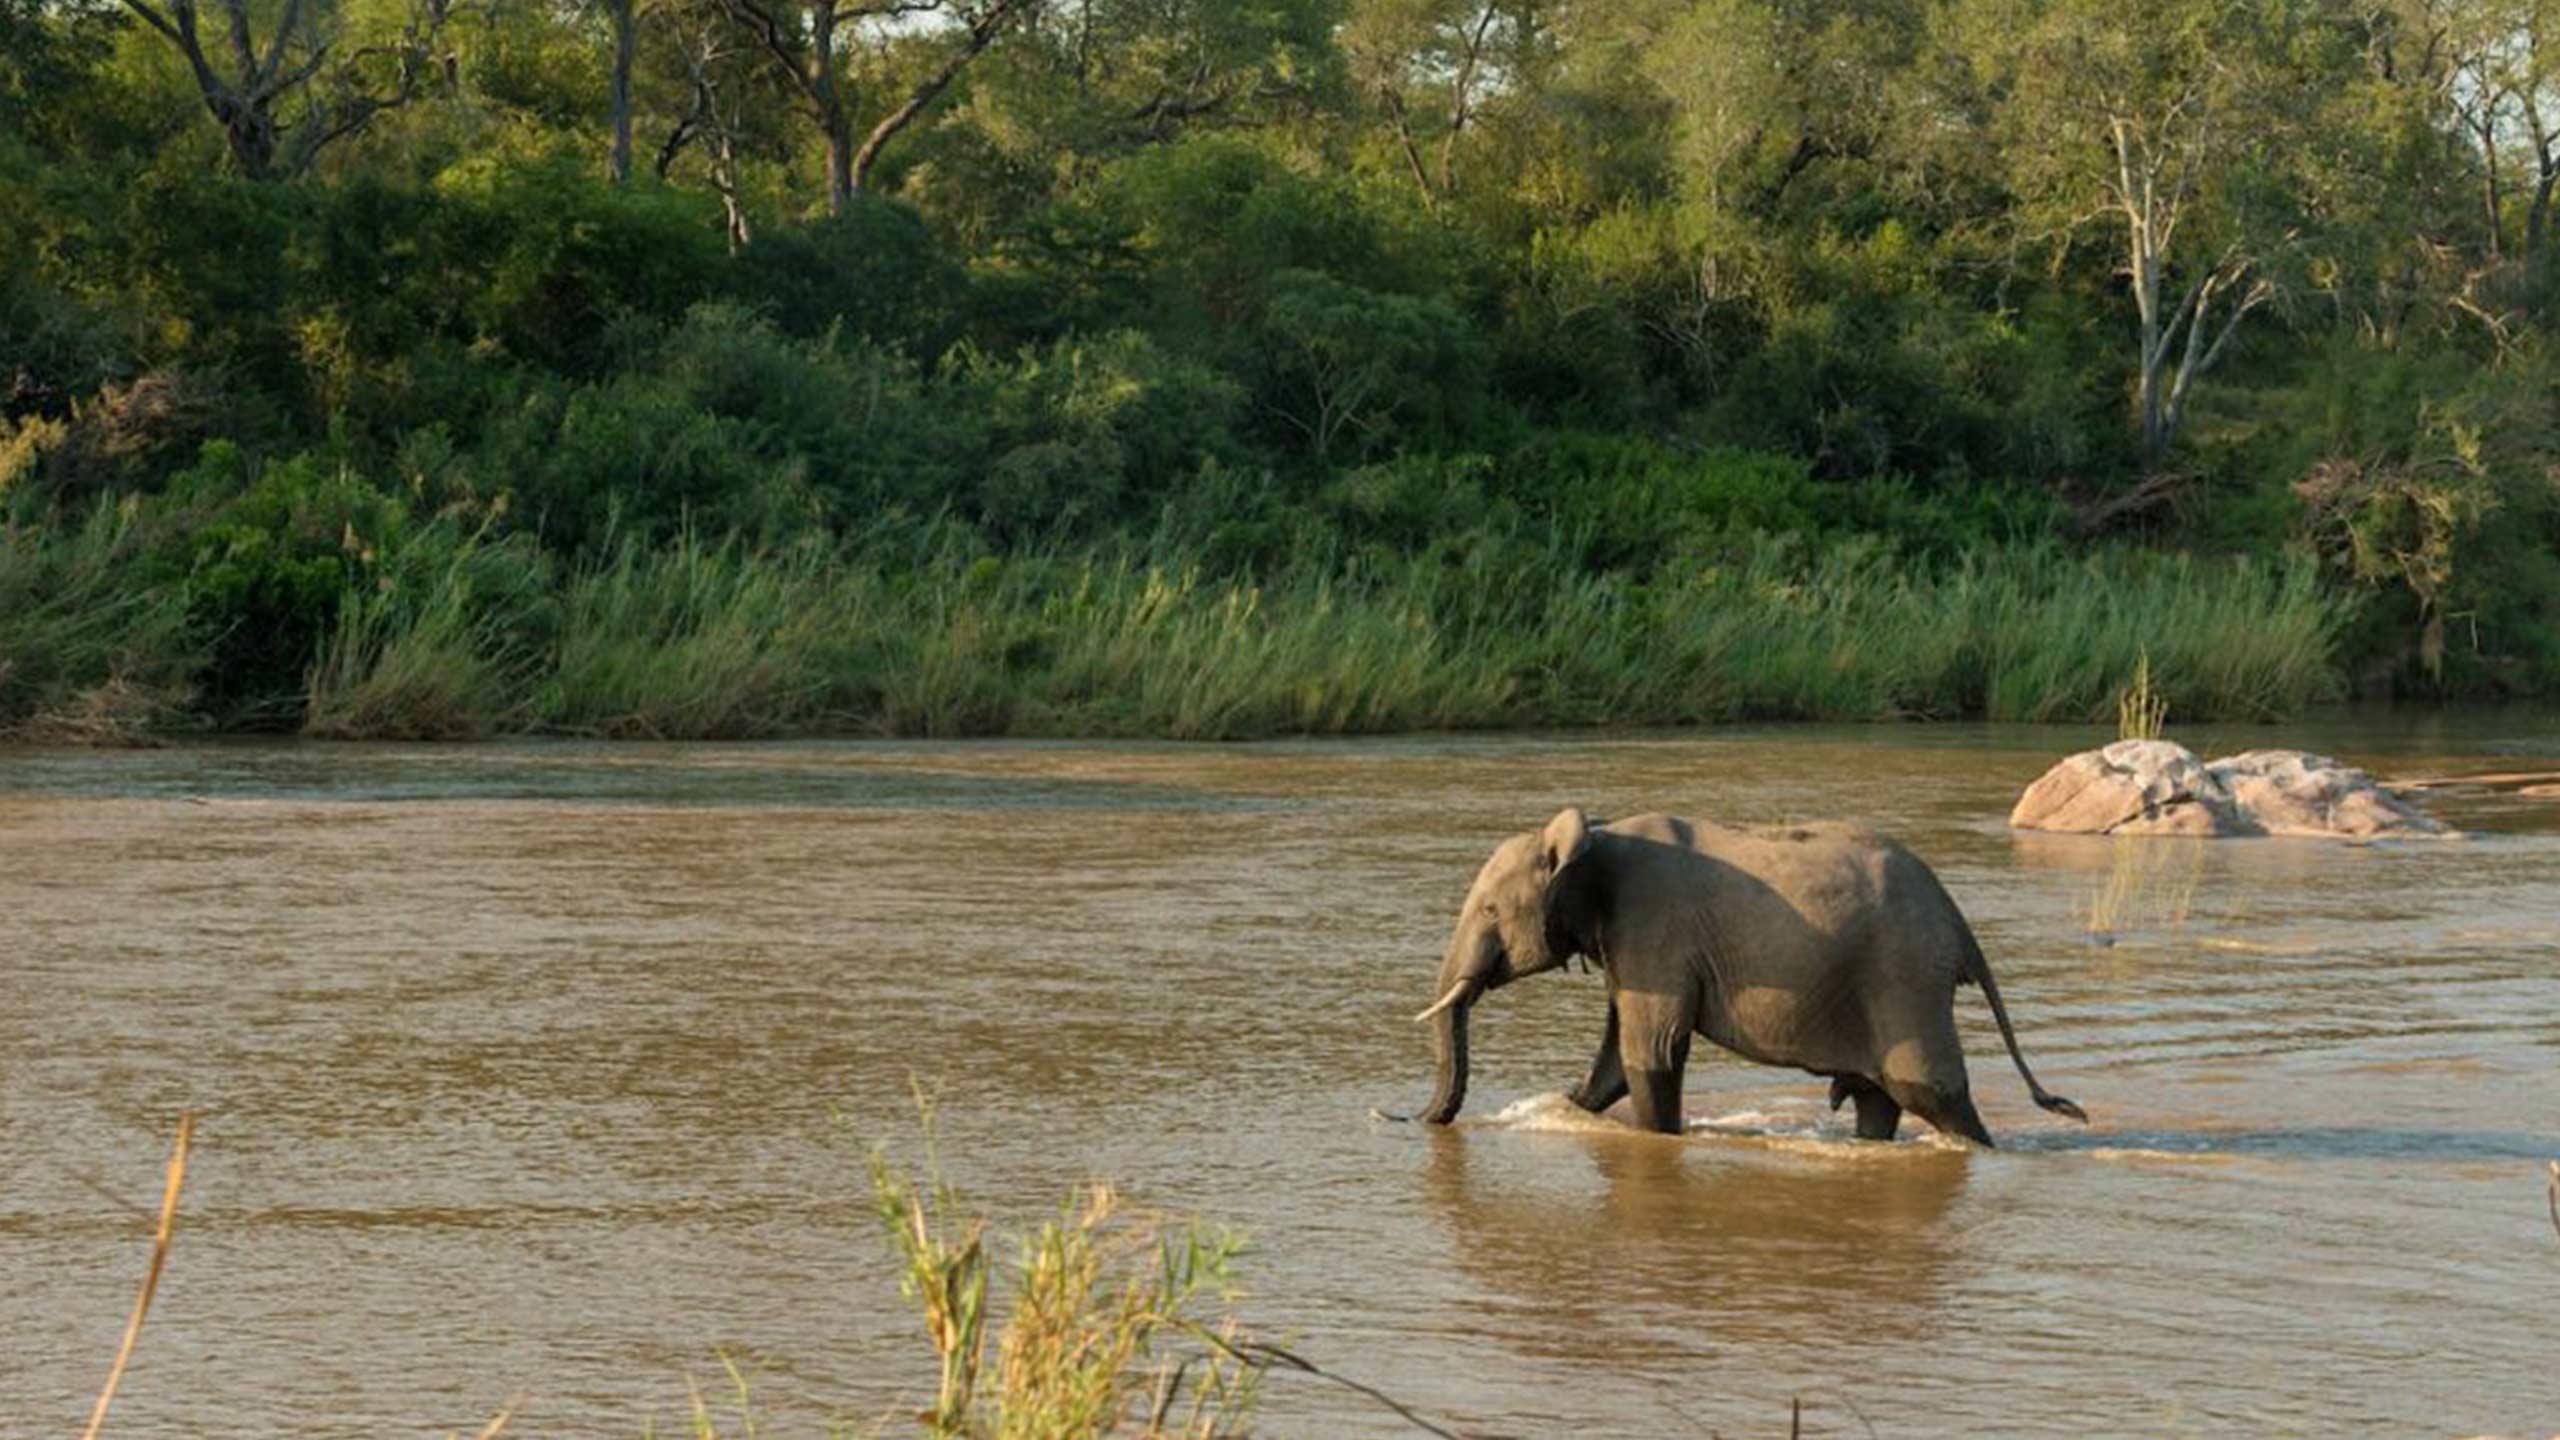 kruger-shalati-the-train-on-the-bridge-south-africa-accommodation-elephant-river